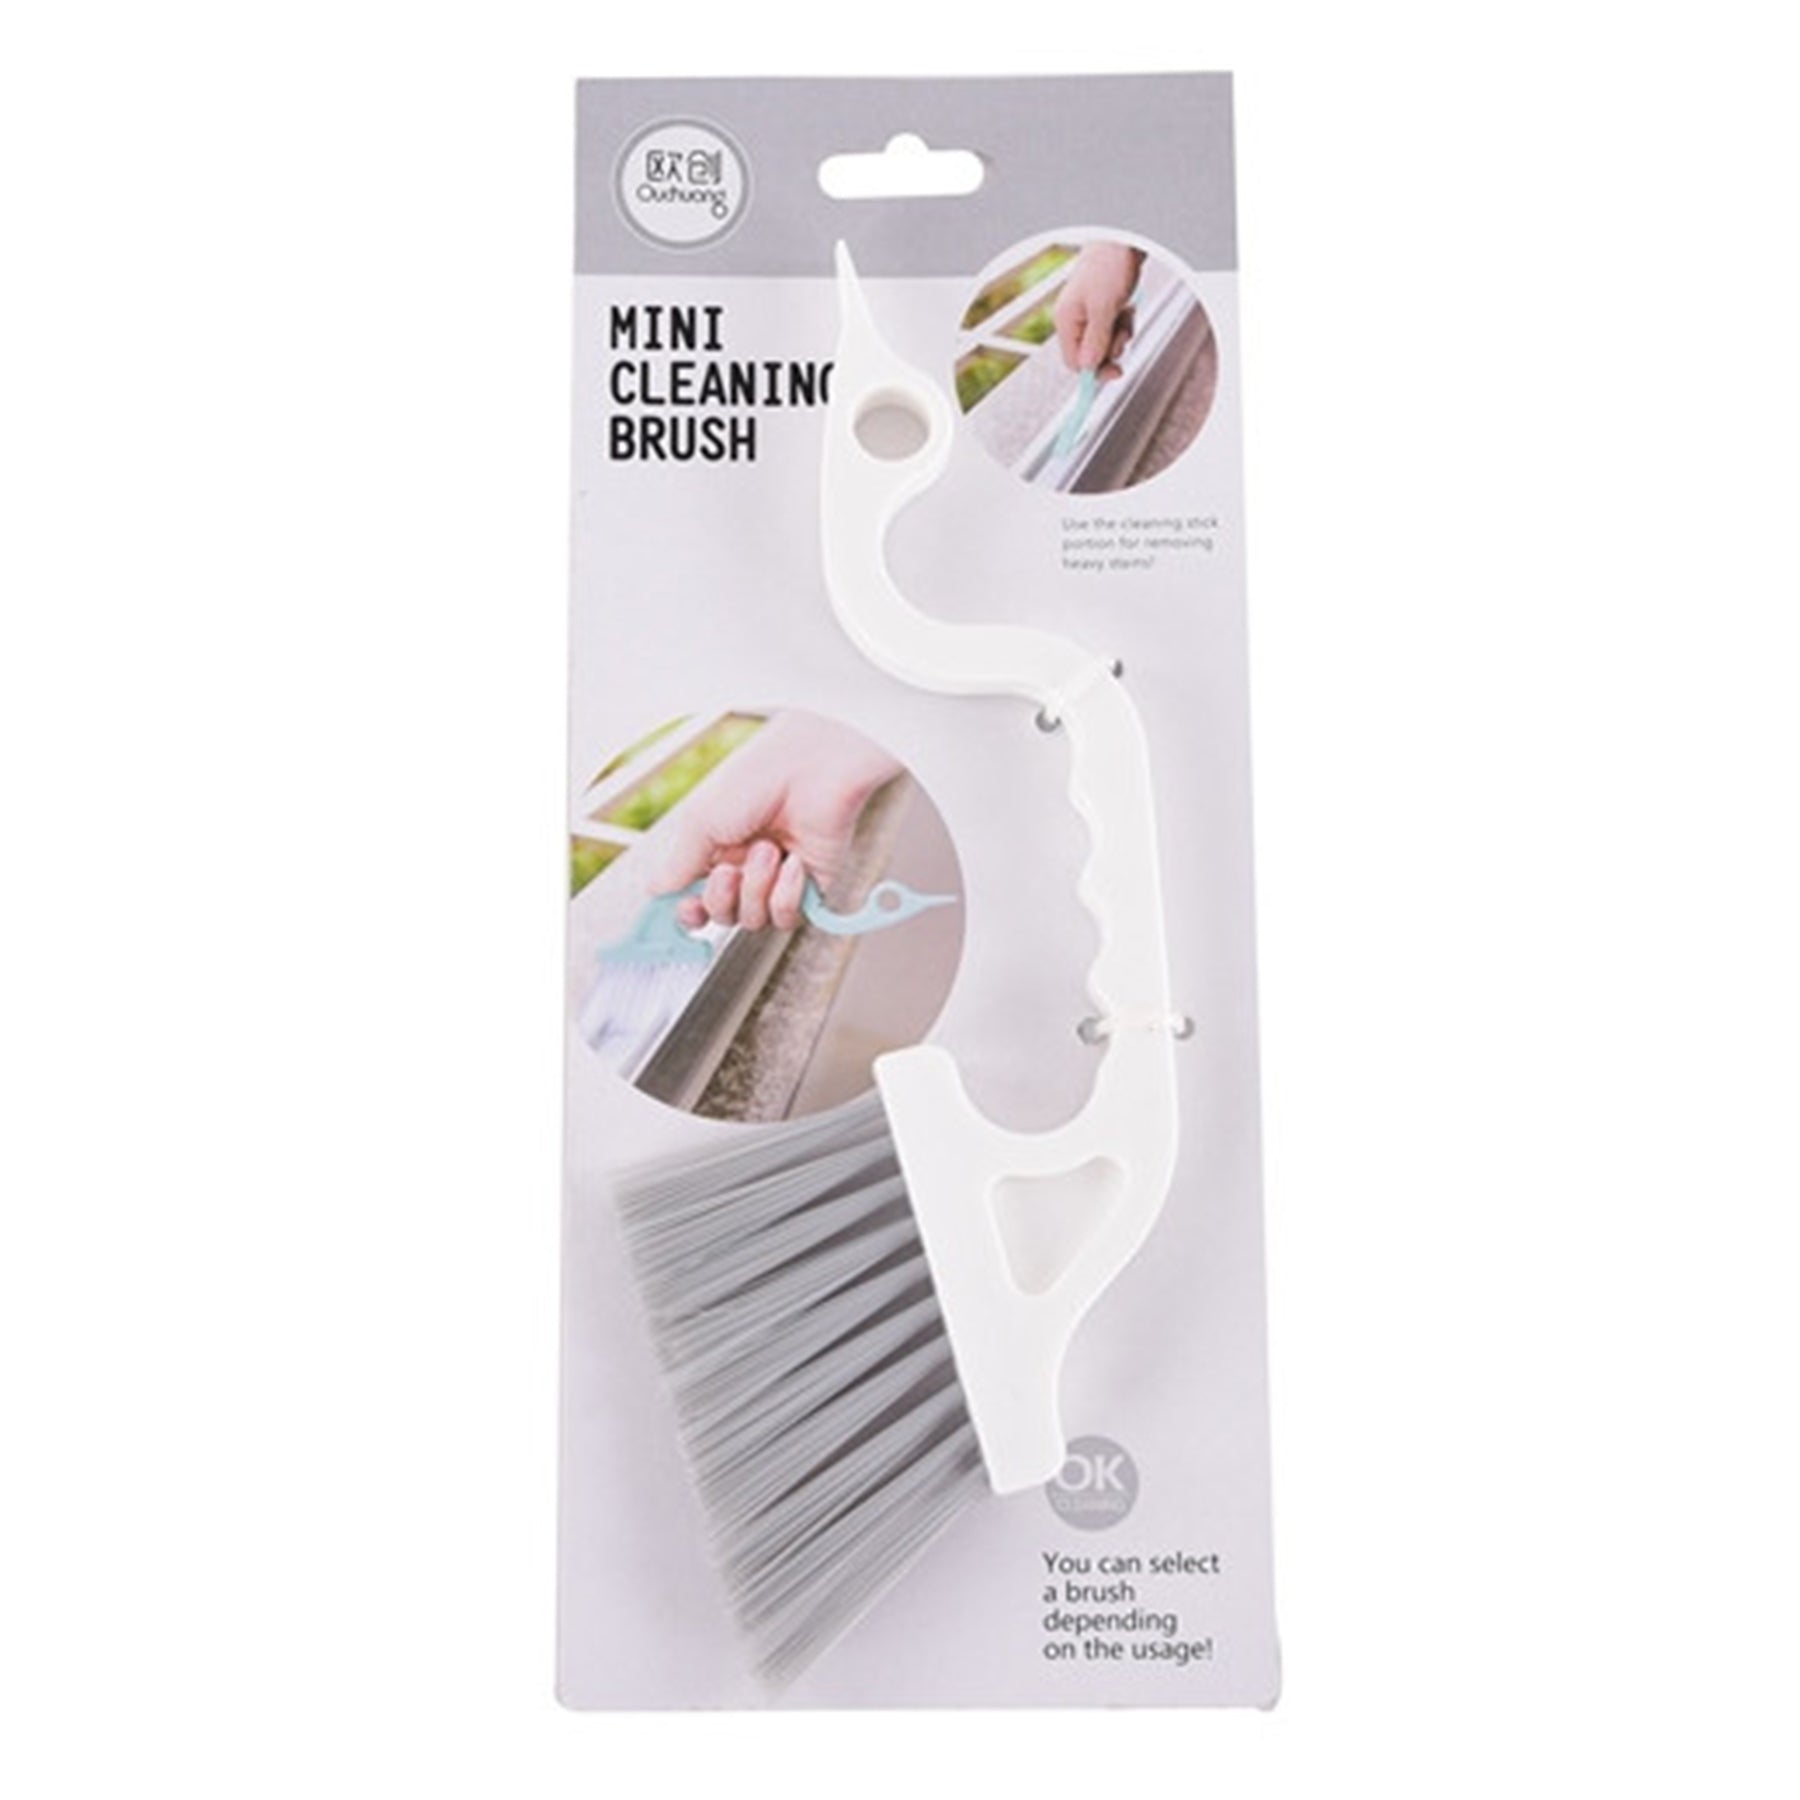 Mini Cleaning Brush- White & Light Grey Color